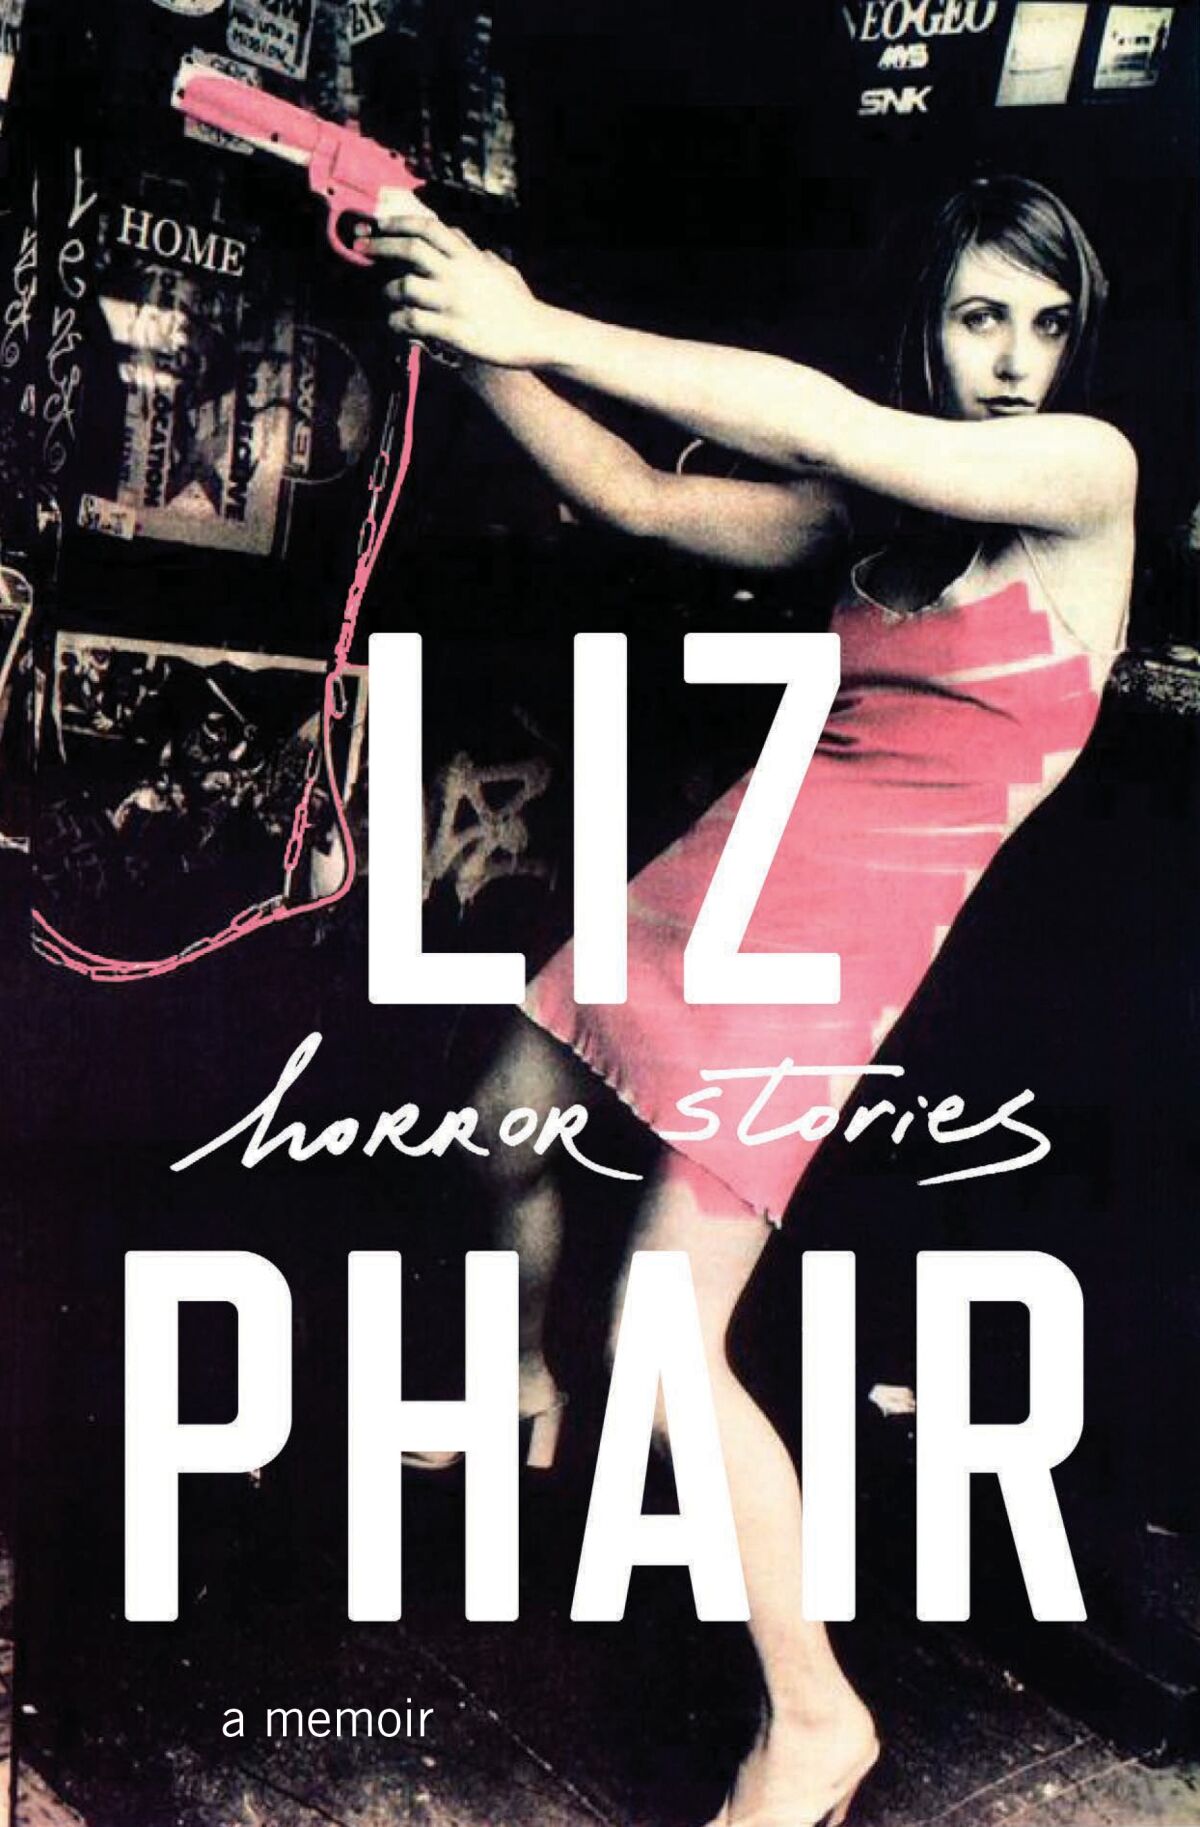 "Horror Stories" by Liz Phair.